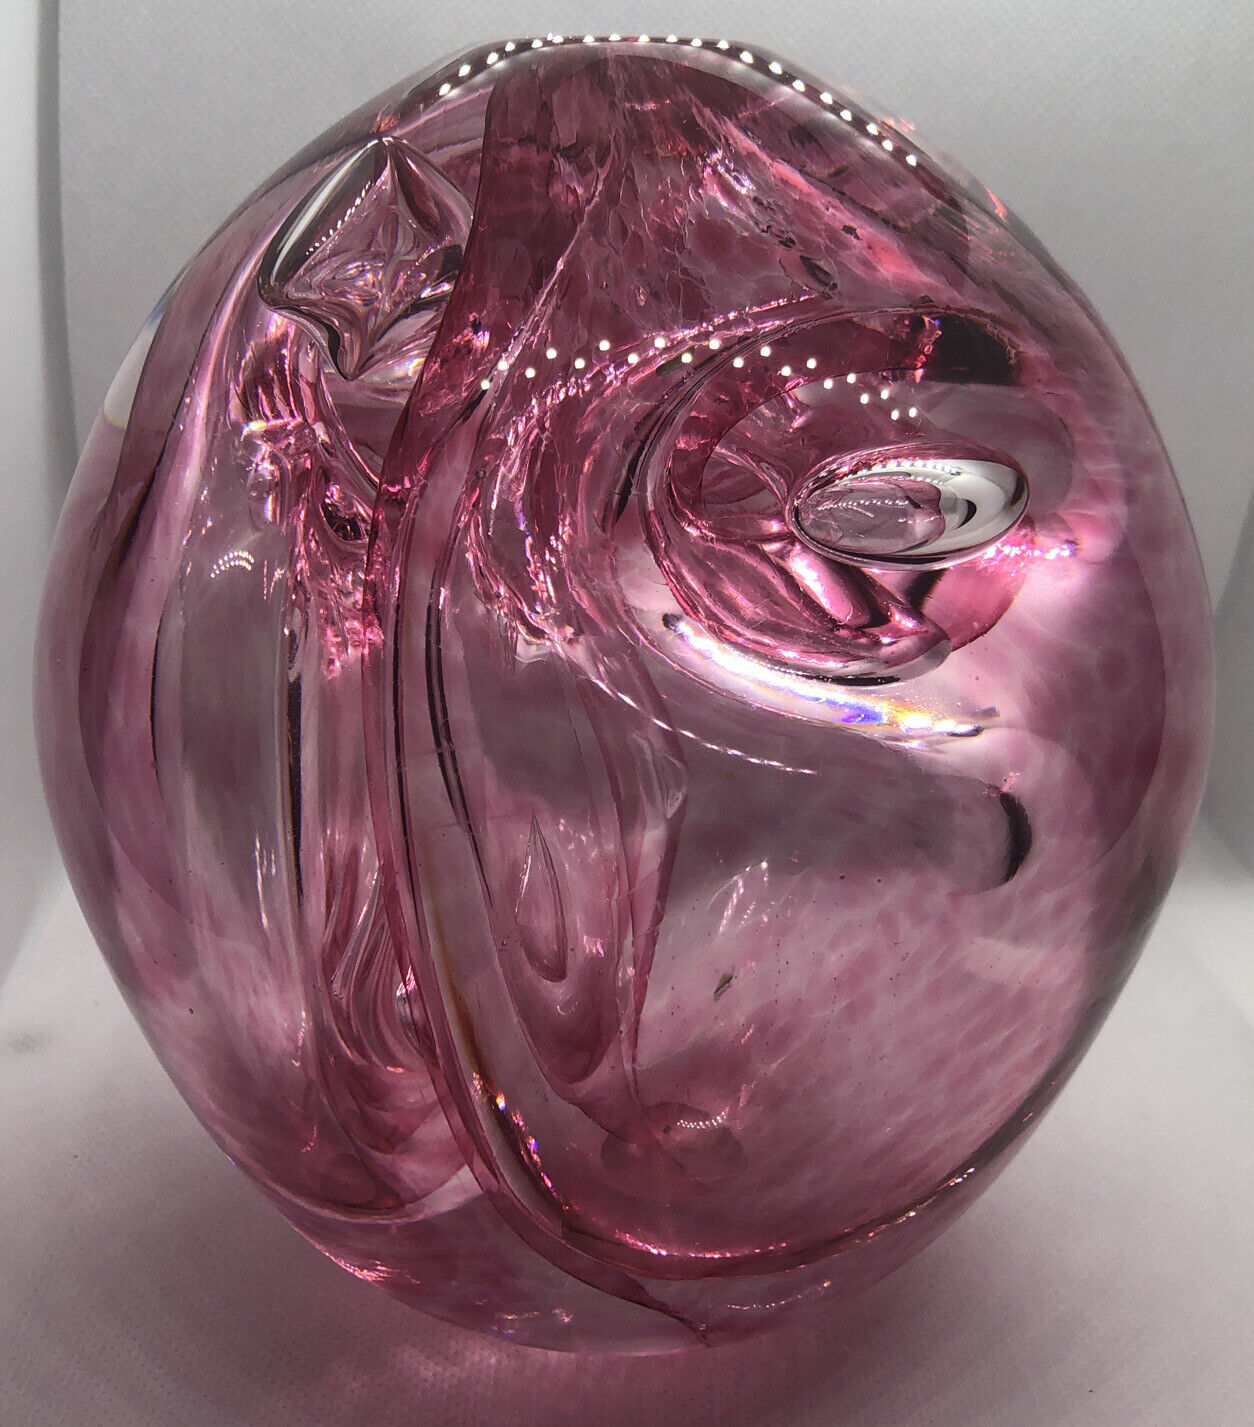 Stunning OOAK William Worcester Art Glass Vase Sculpture 6.5” x 6.5” Signed